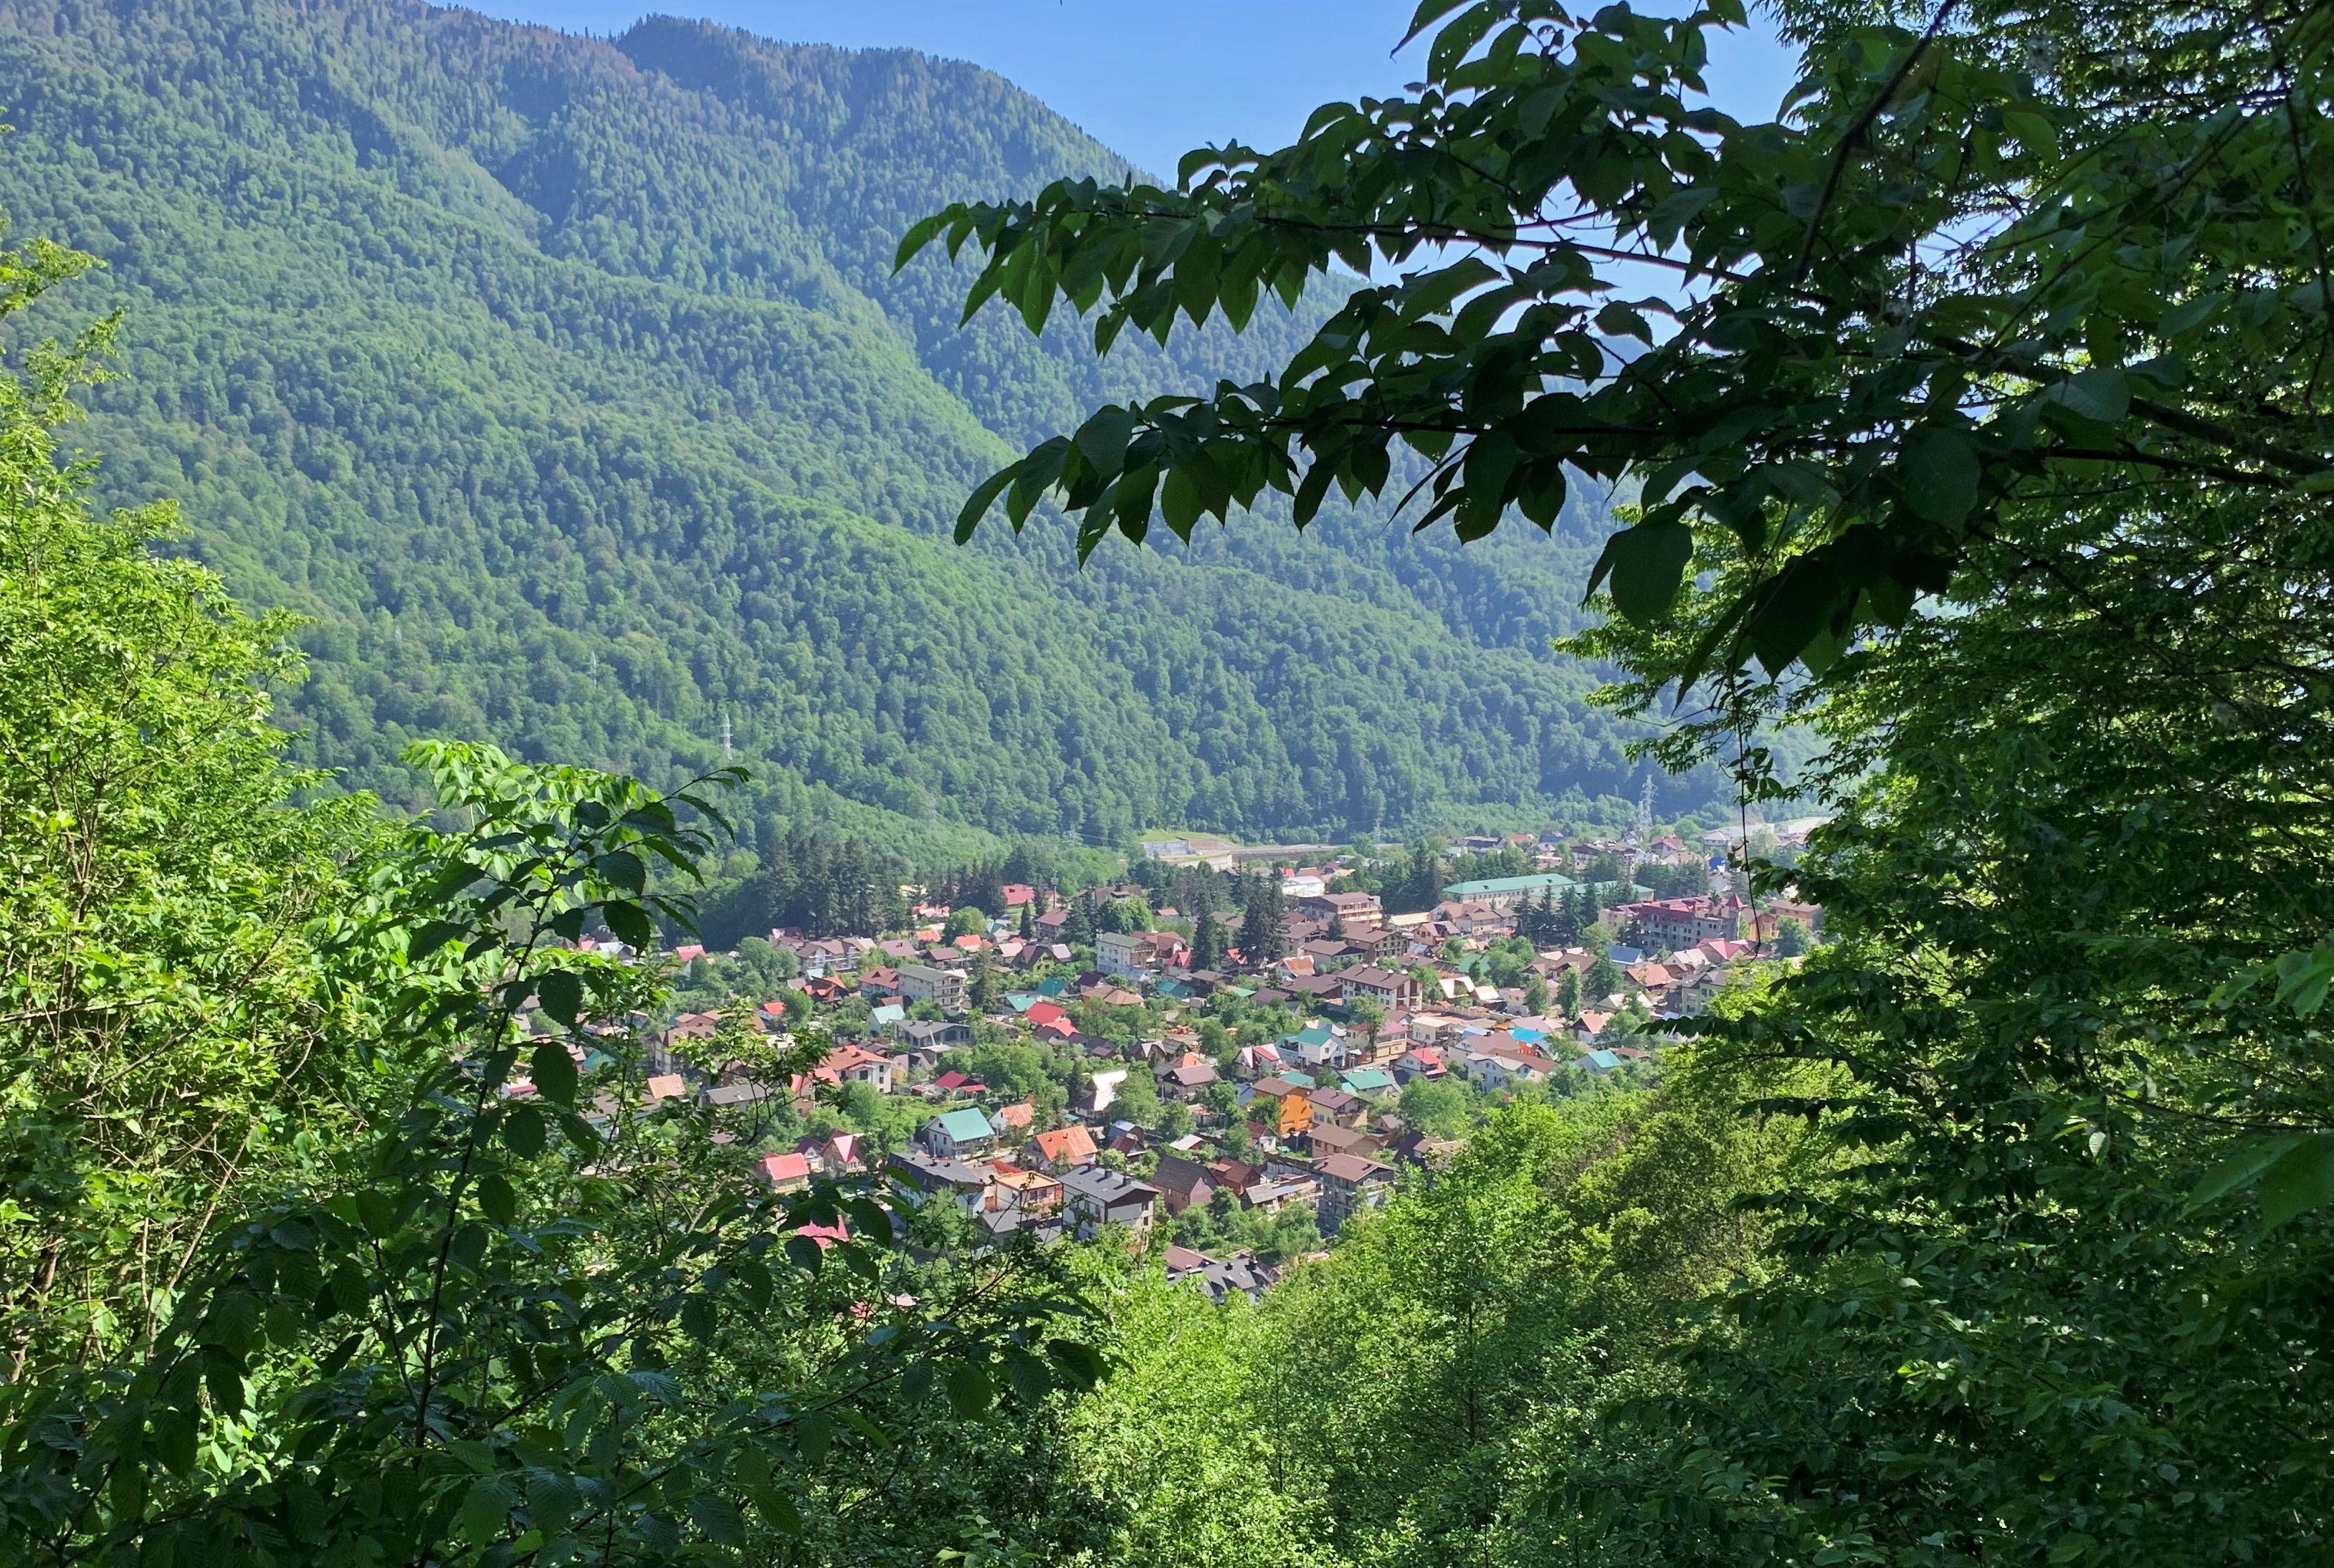 A view shows the village of Krasnaya Polyana